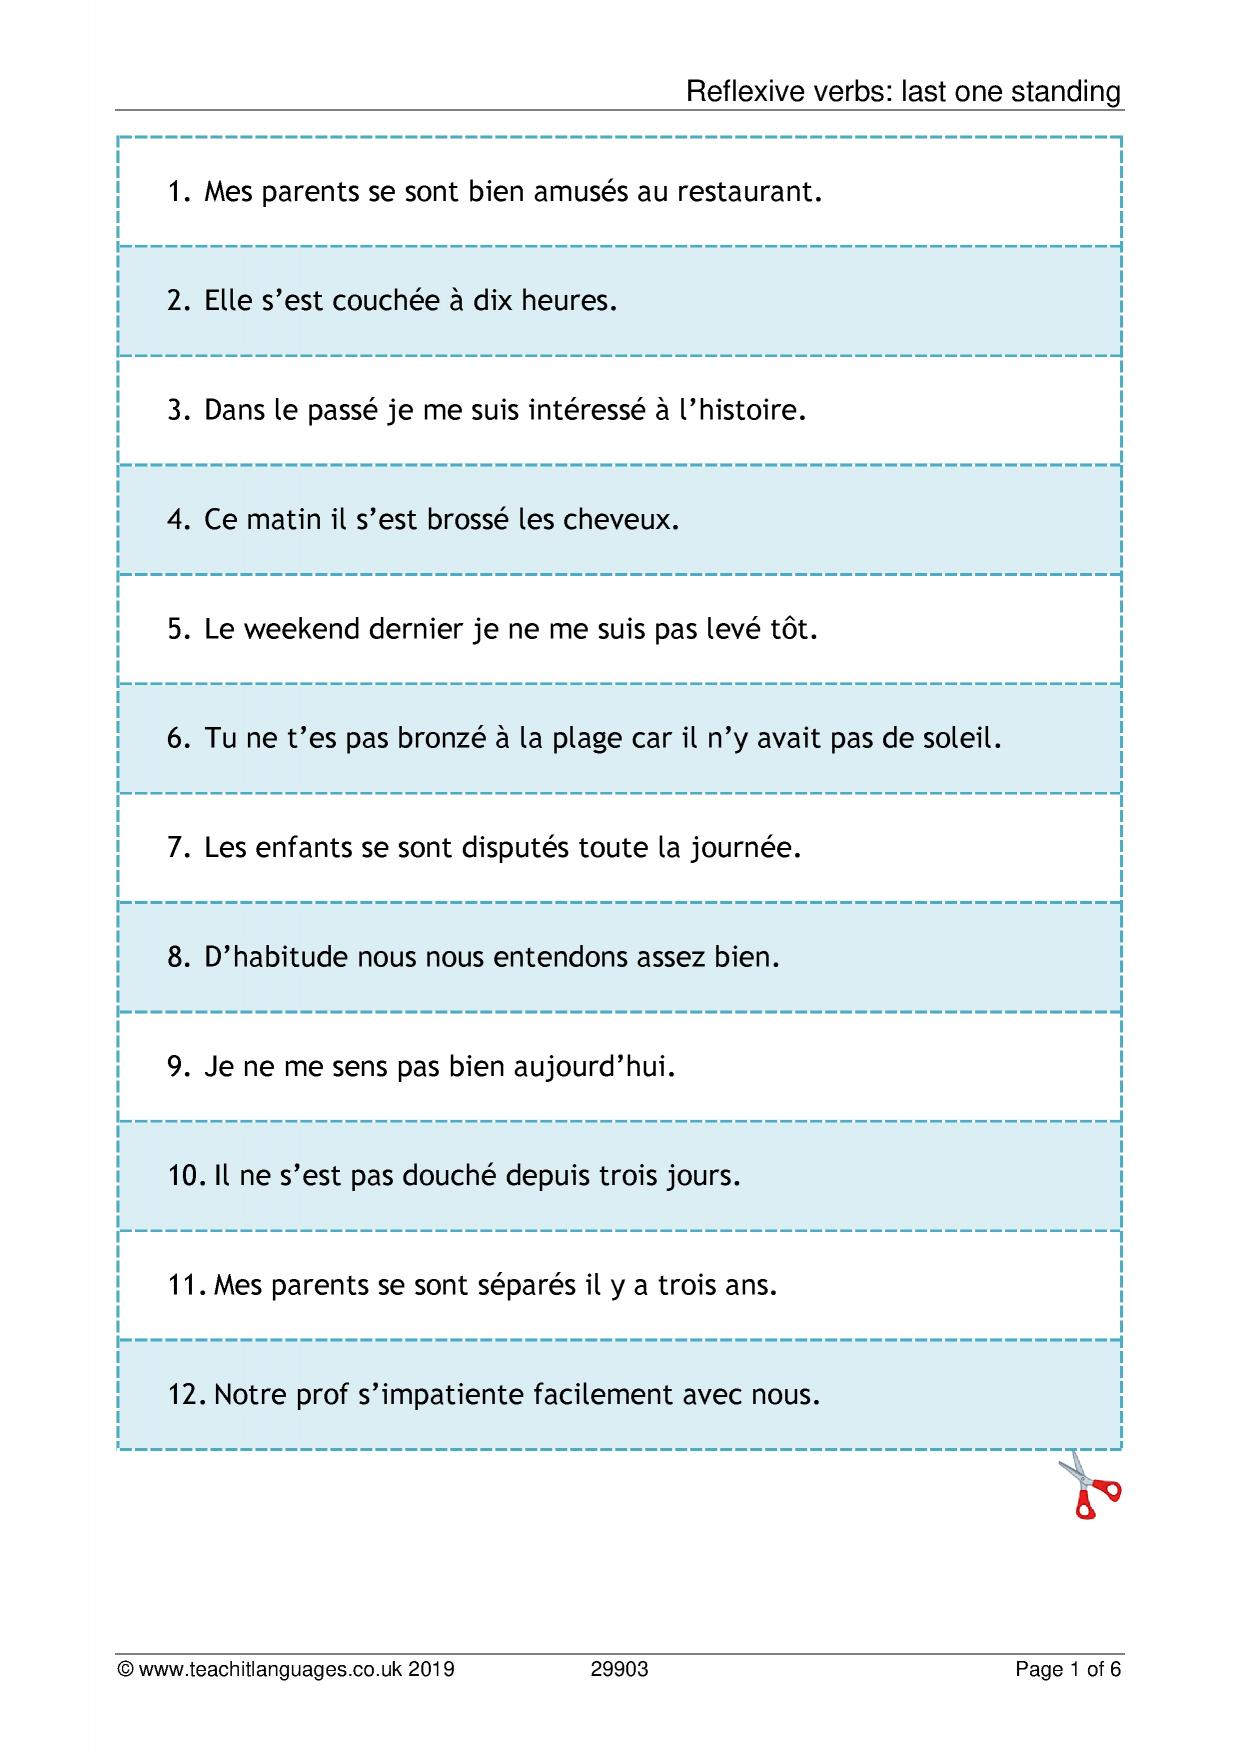 french reflexive verbs activities Inside Reflexive Verbs Spanish Worksheet